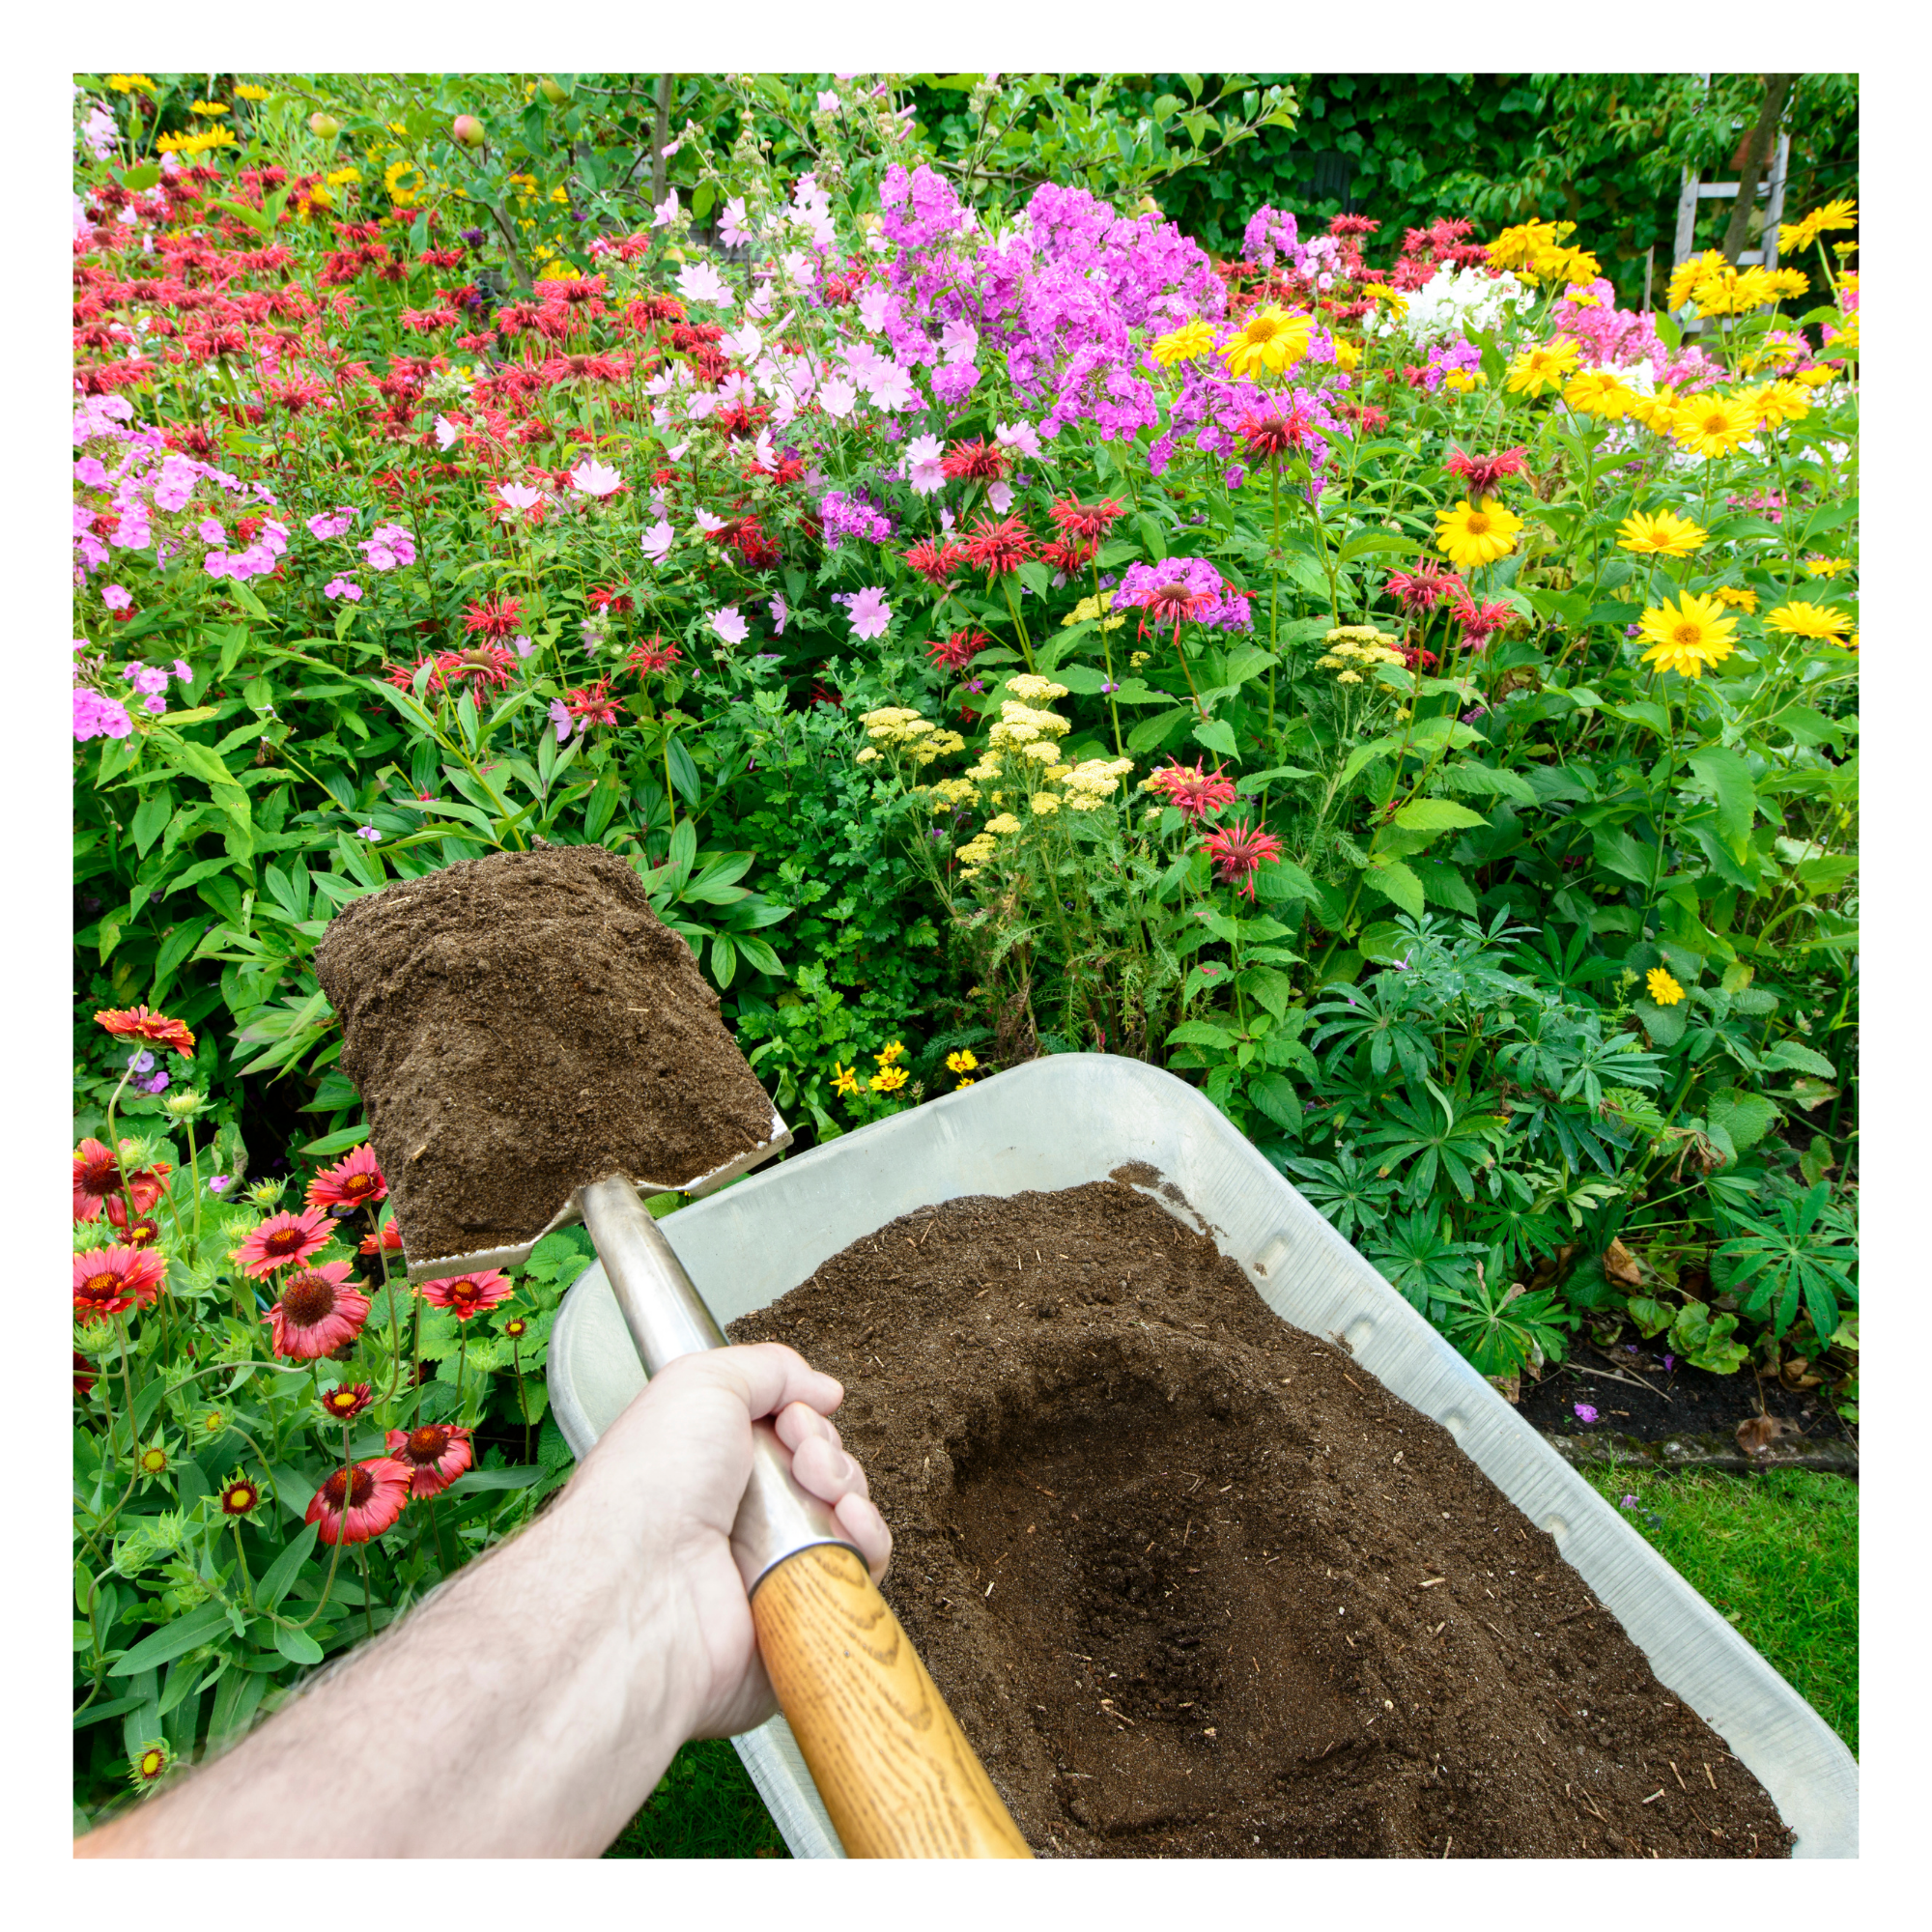 Topsoil in wheelbarrow and shovel by plants